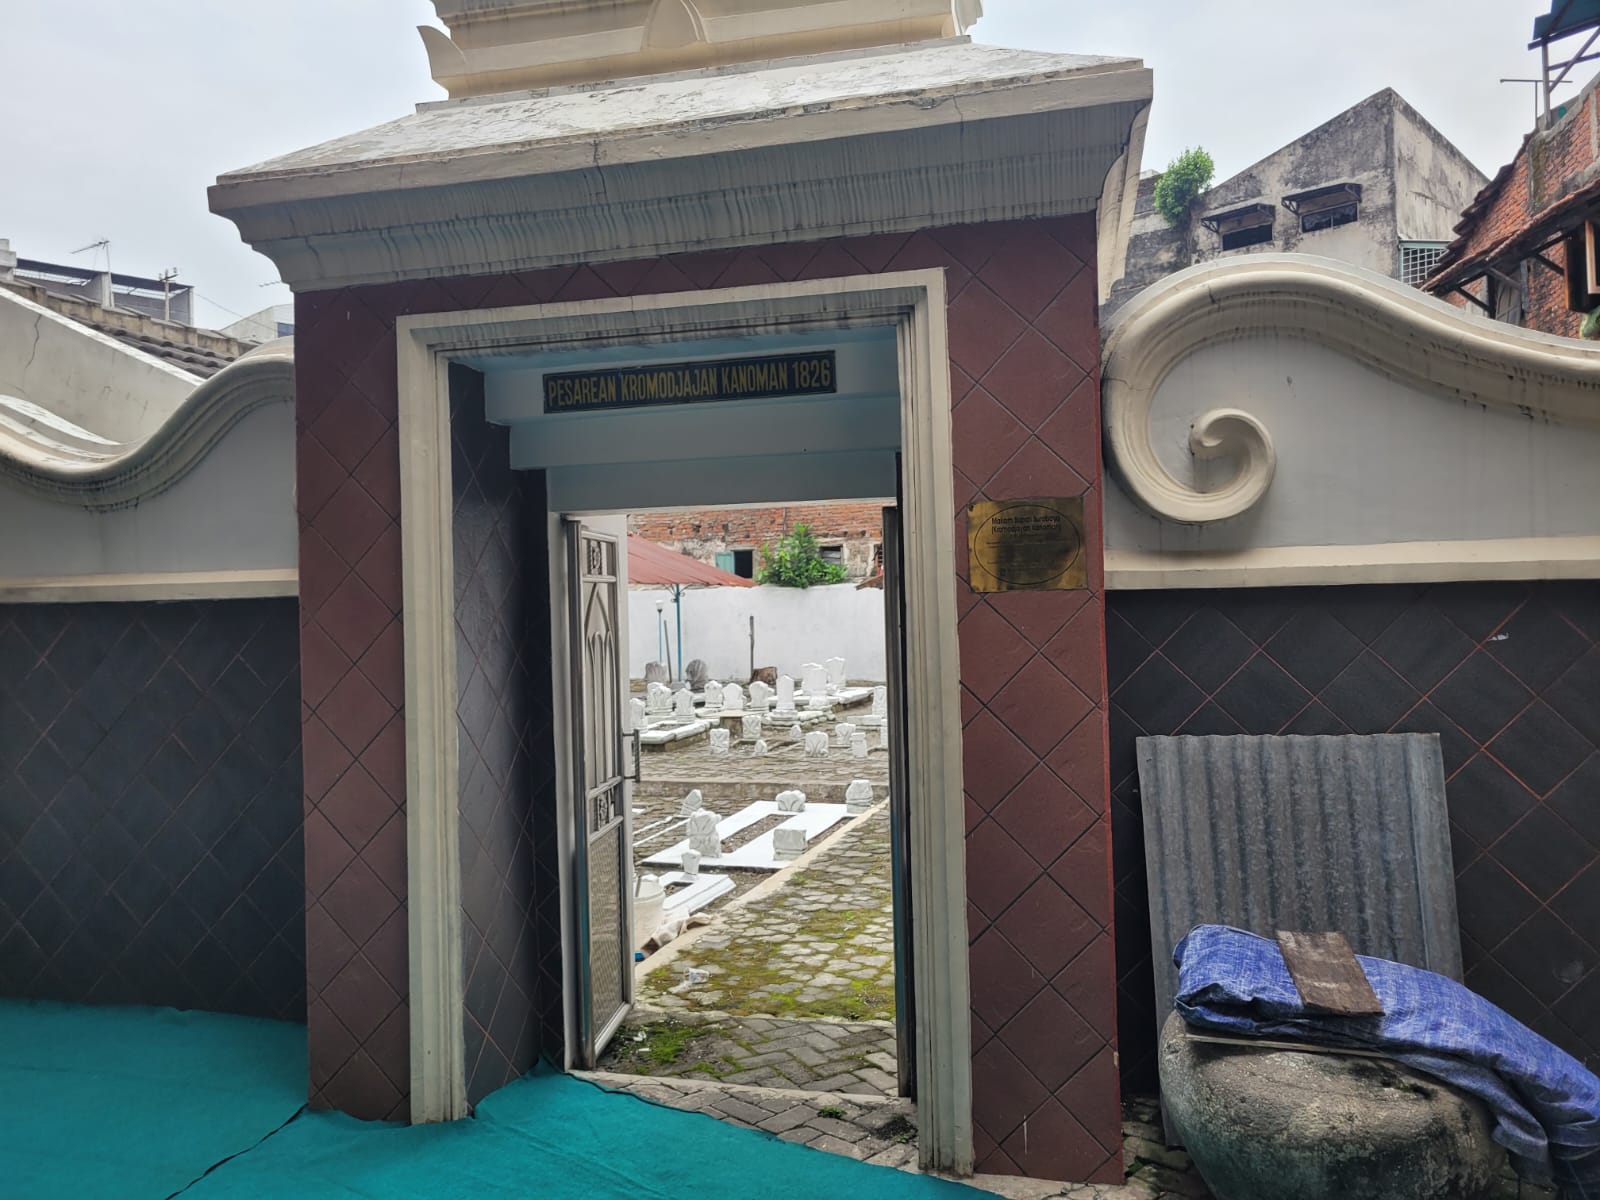 Makam Bupati Surabaya (Kromodjayan Kanoman)